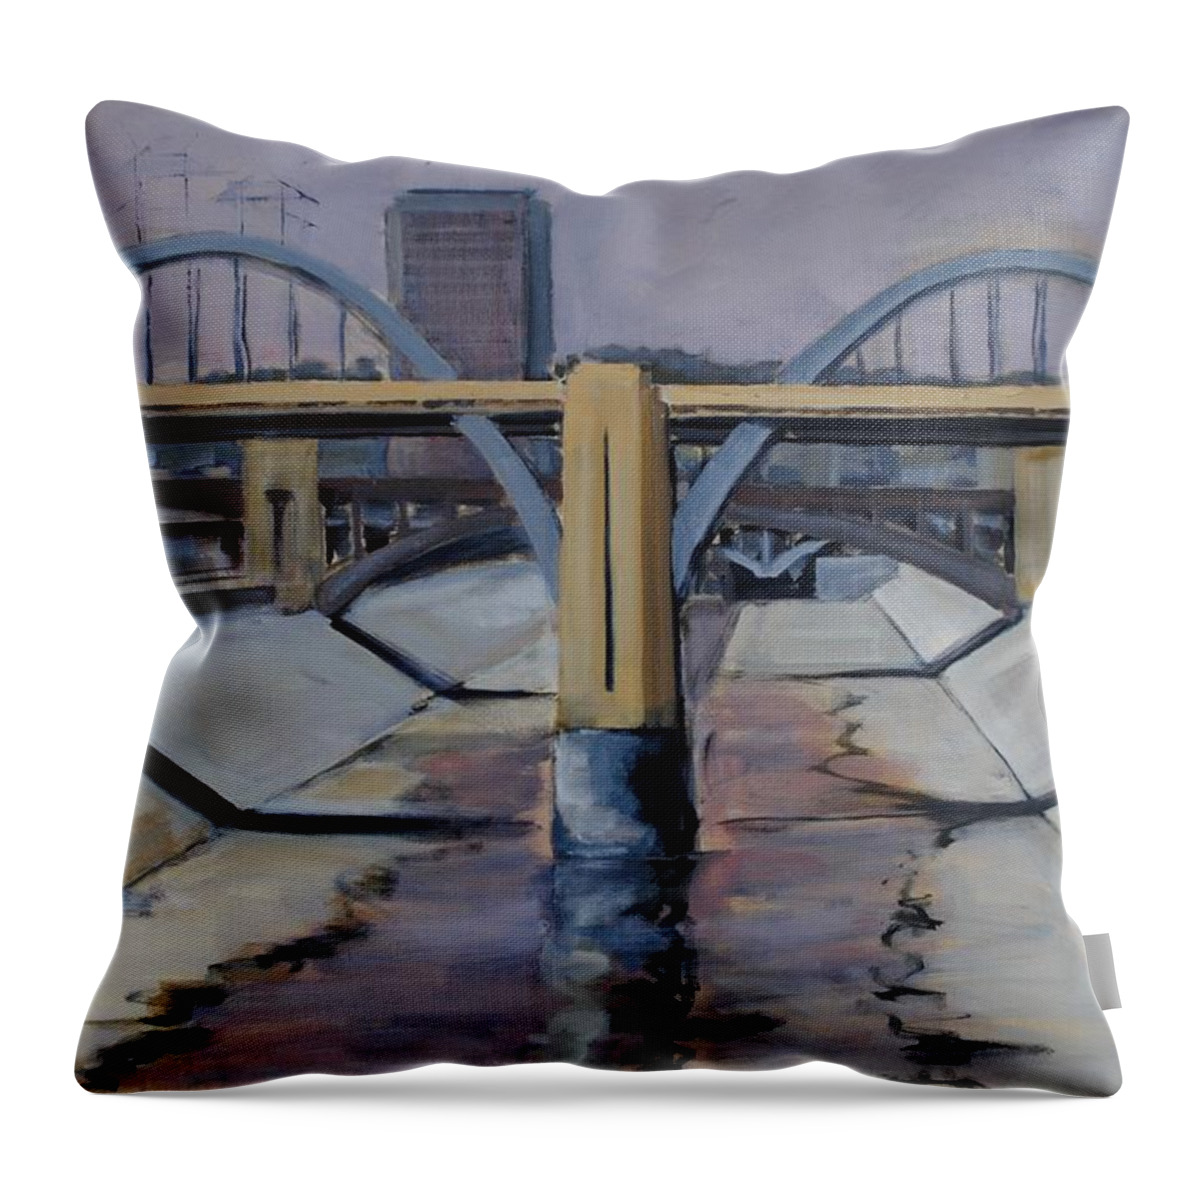 6th Street Bridge Throw Pillow featuring the painting 6th Street Bridge by Richard Willson